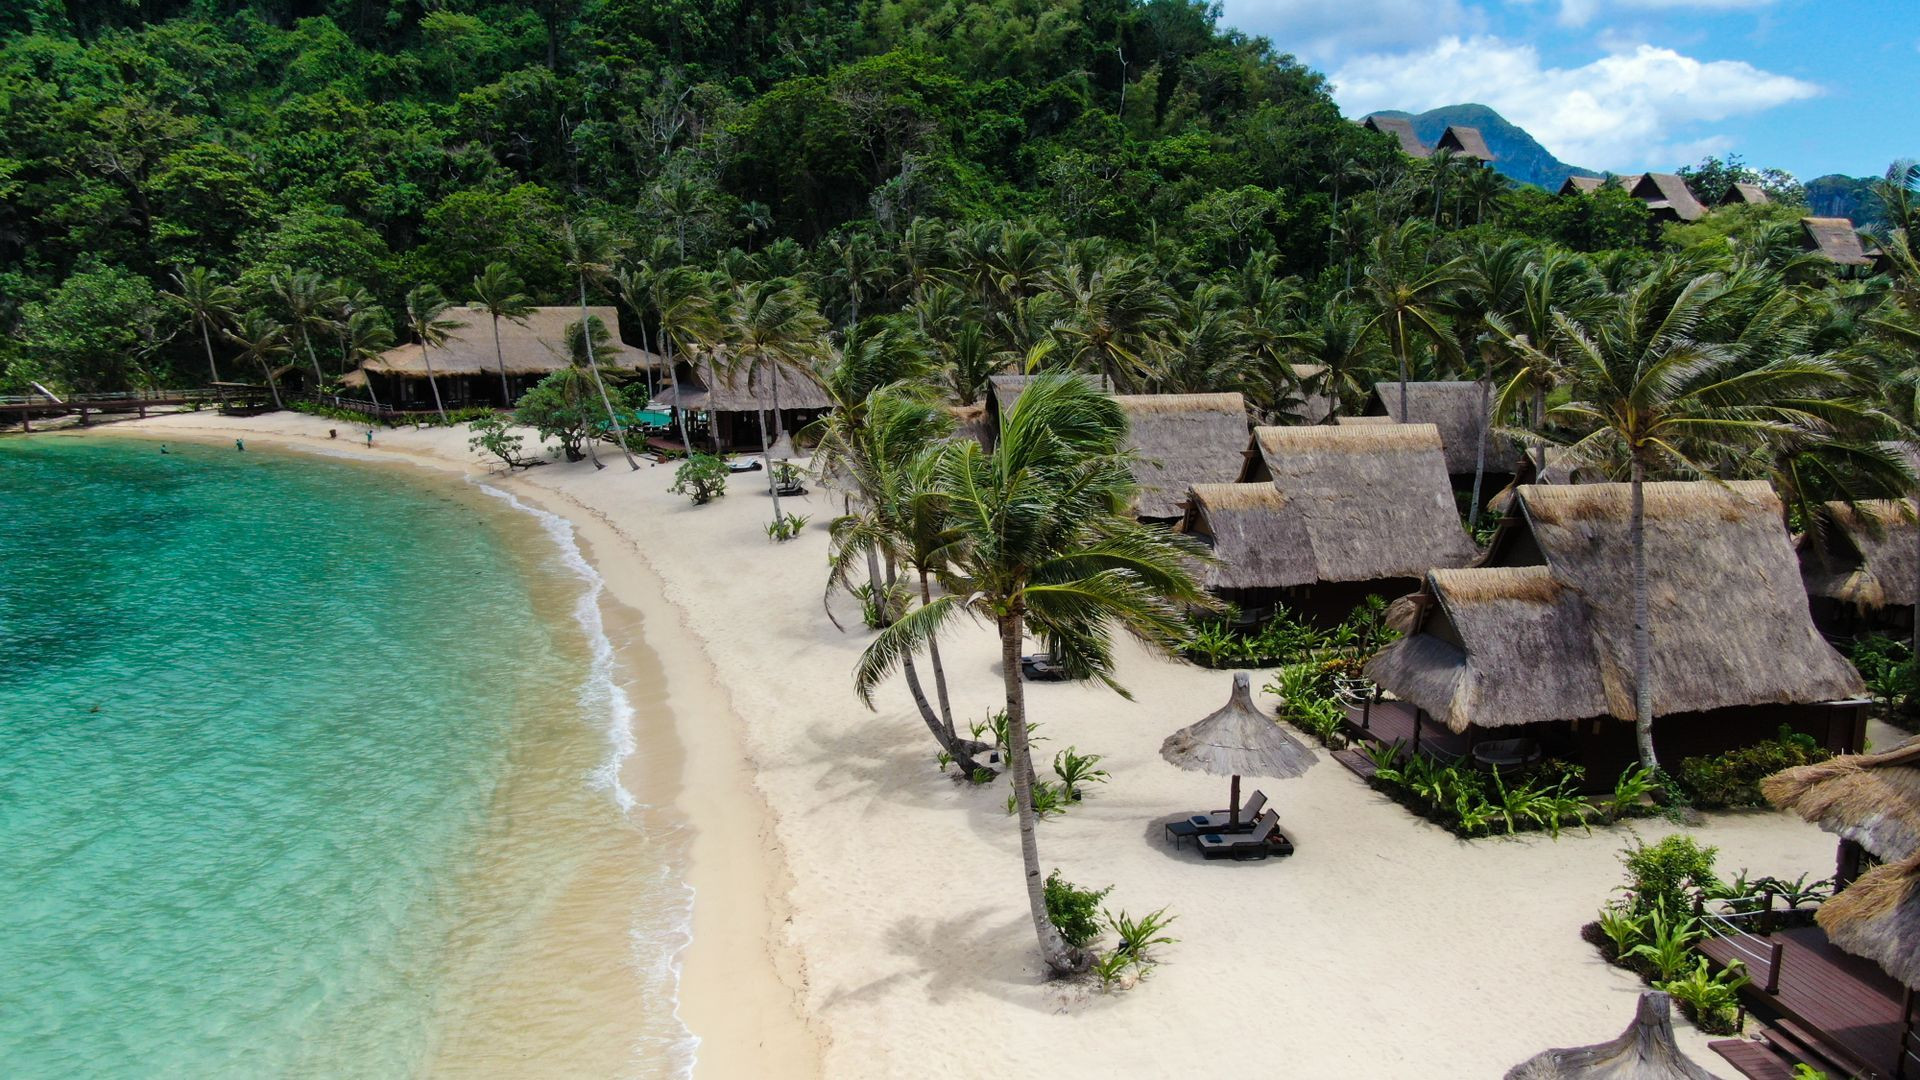 Cauayan Island Resort